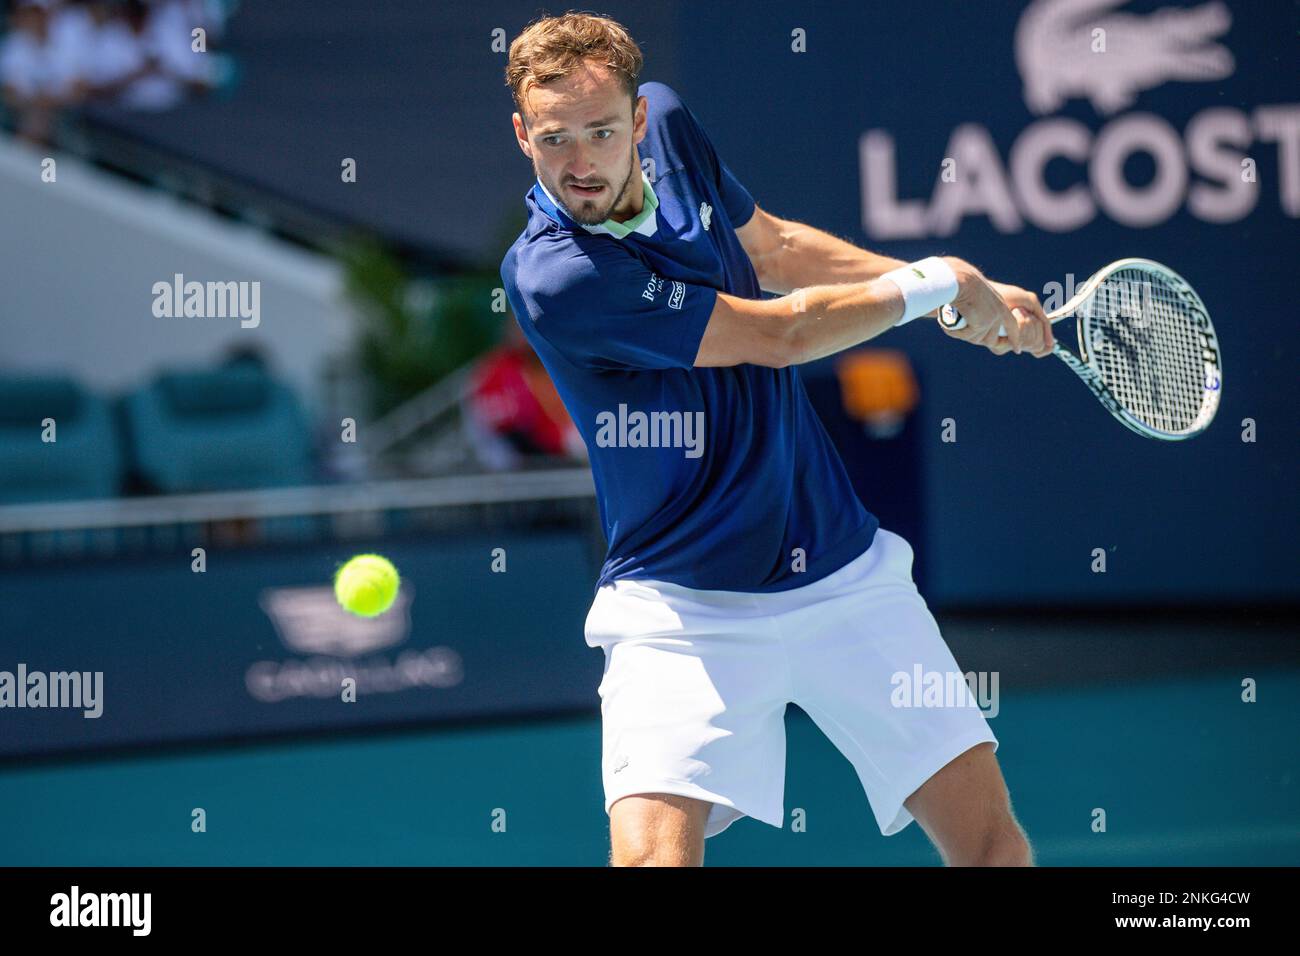 Daniil Medvedev during the Miami Open Tennis tournament on Monday, March 21, 2022 in Miami Gardens, Fla